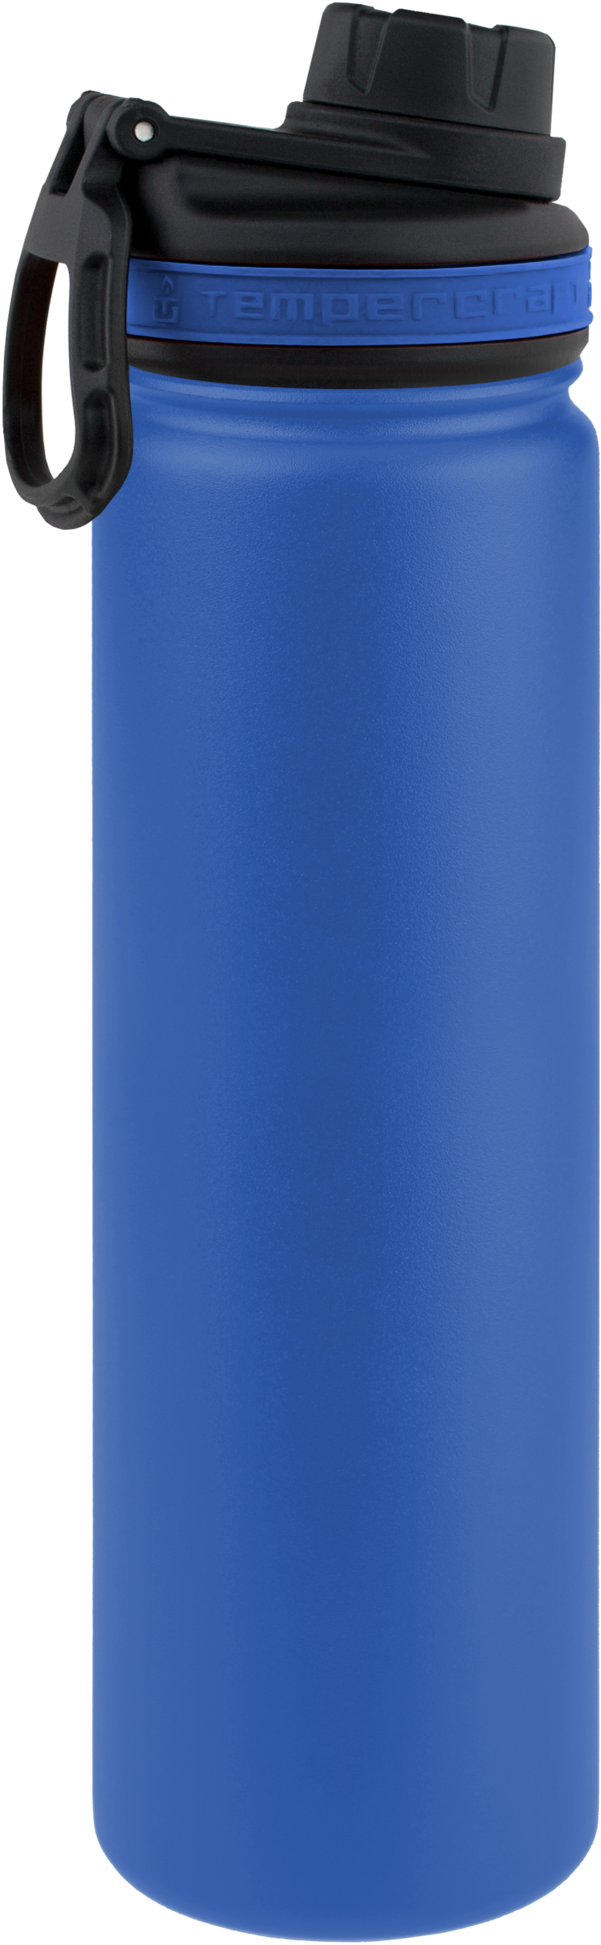 Water Bottle Clipart - Tarpaulin - Png Download (601x1945), Png Download